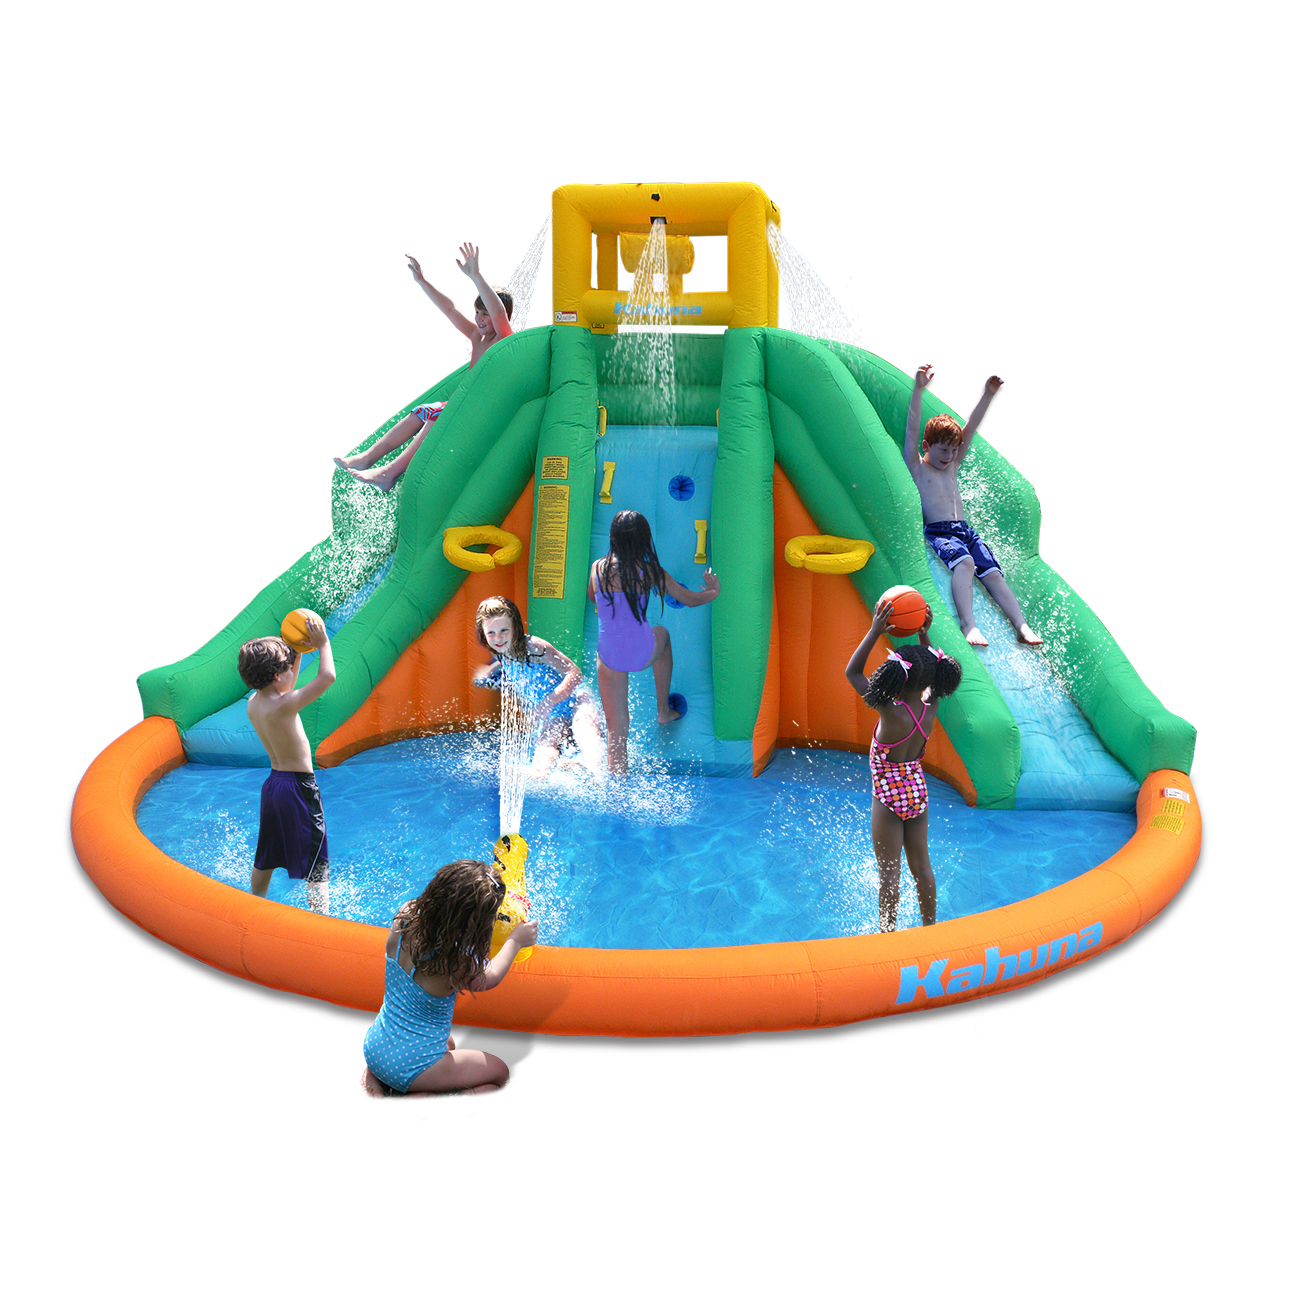 Kahuna Twin Peaks Kids Inflatable Splash Pool Backyard Water Slide Park